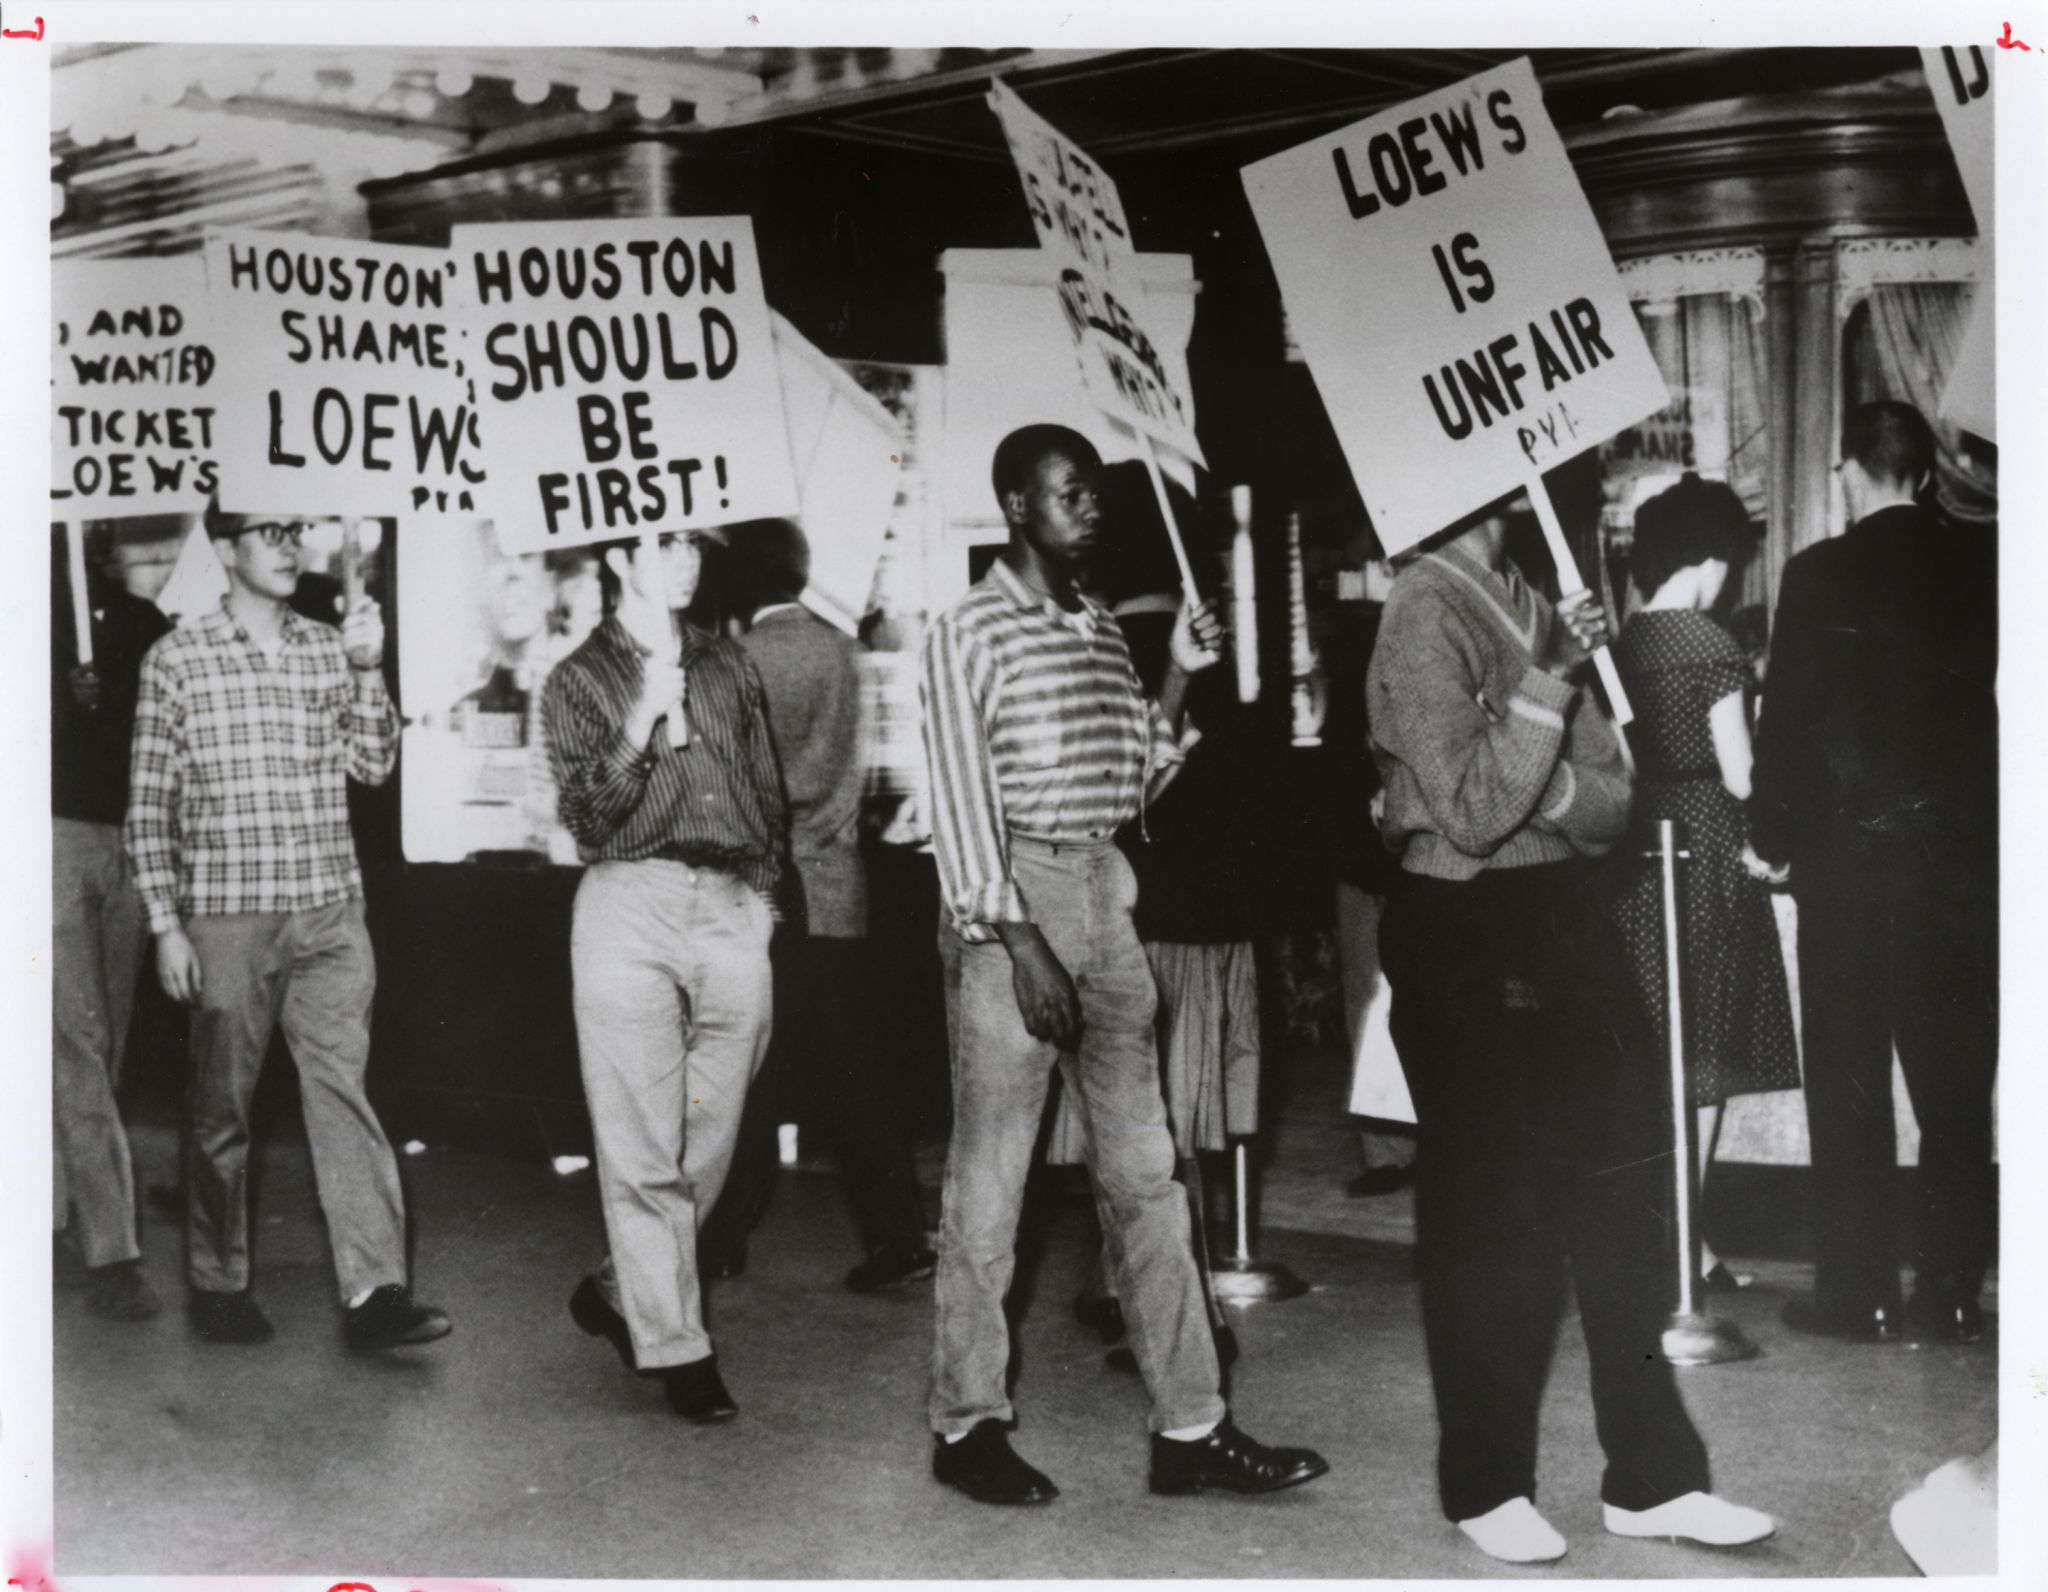 Historic photos show segregated life in Jim Crow Texas